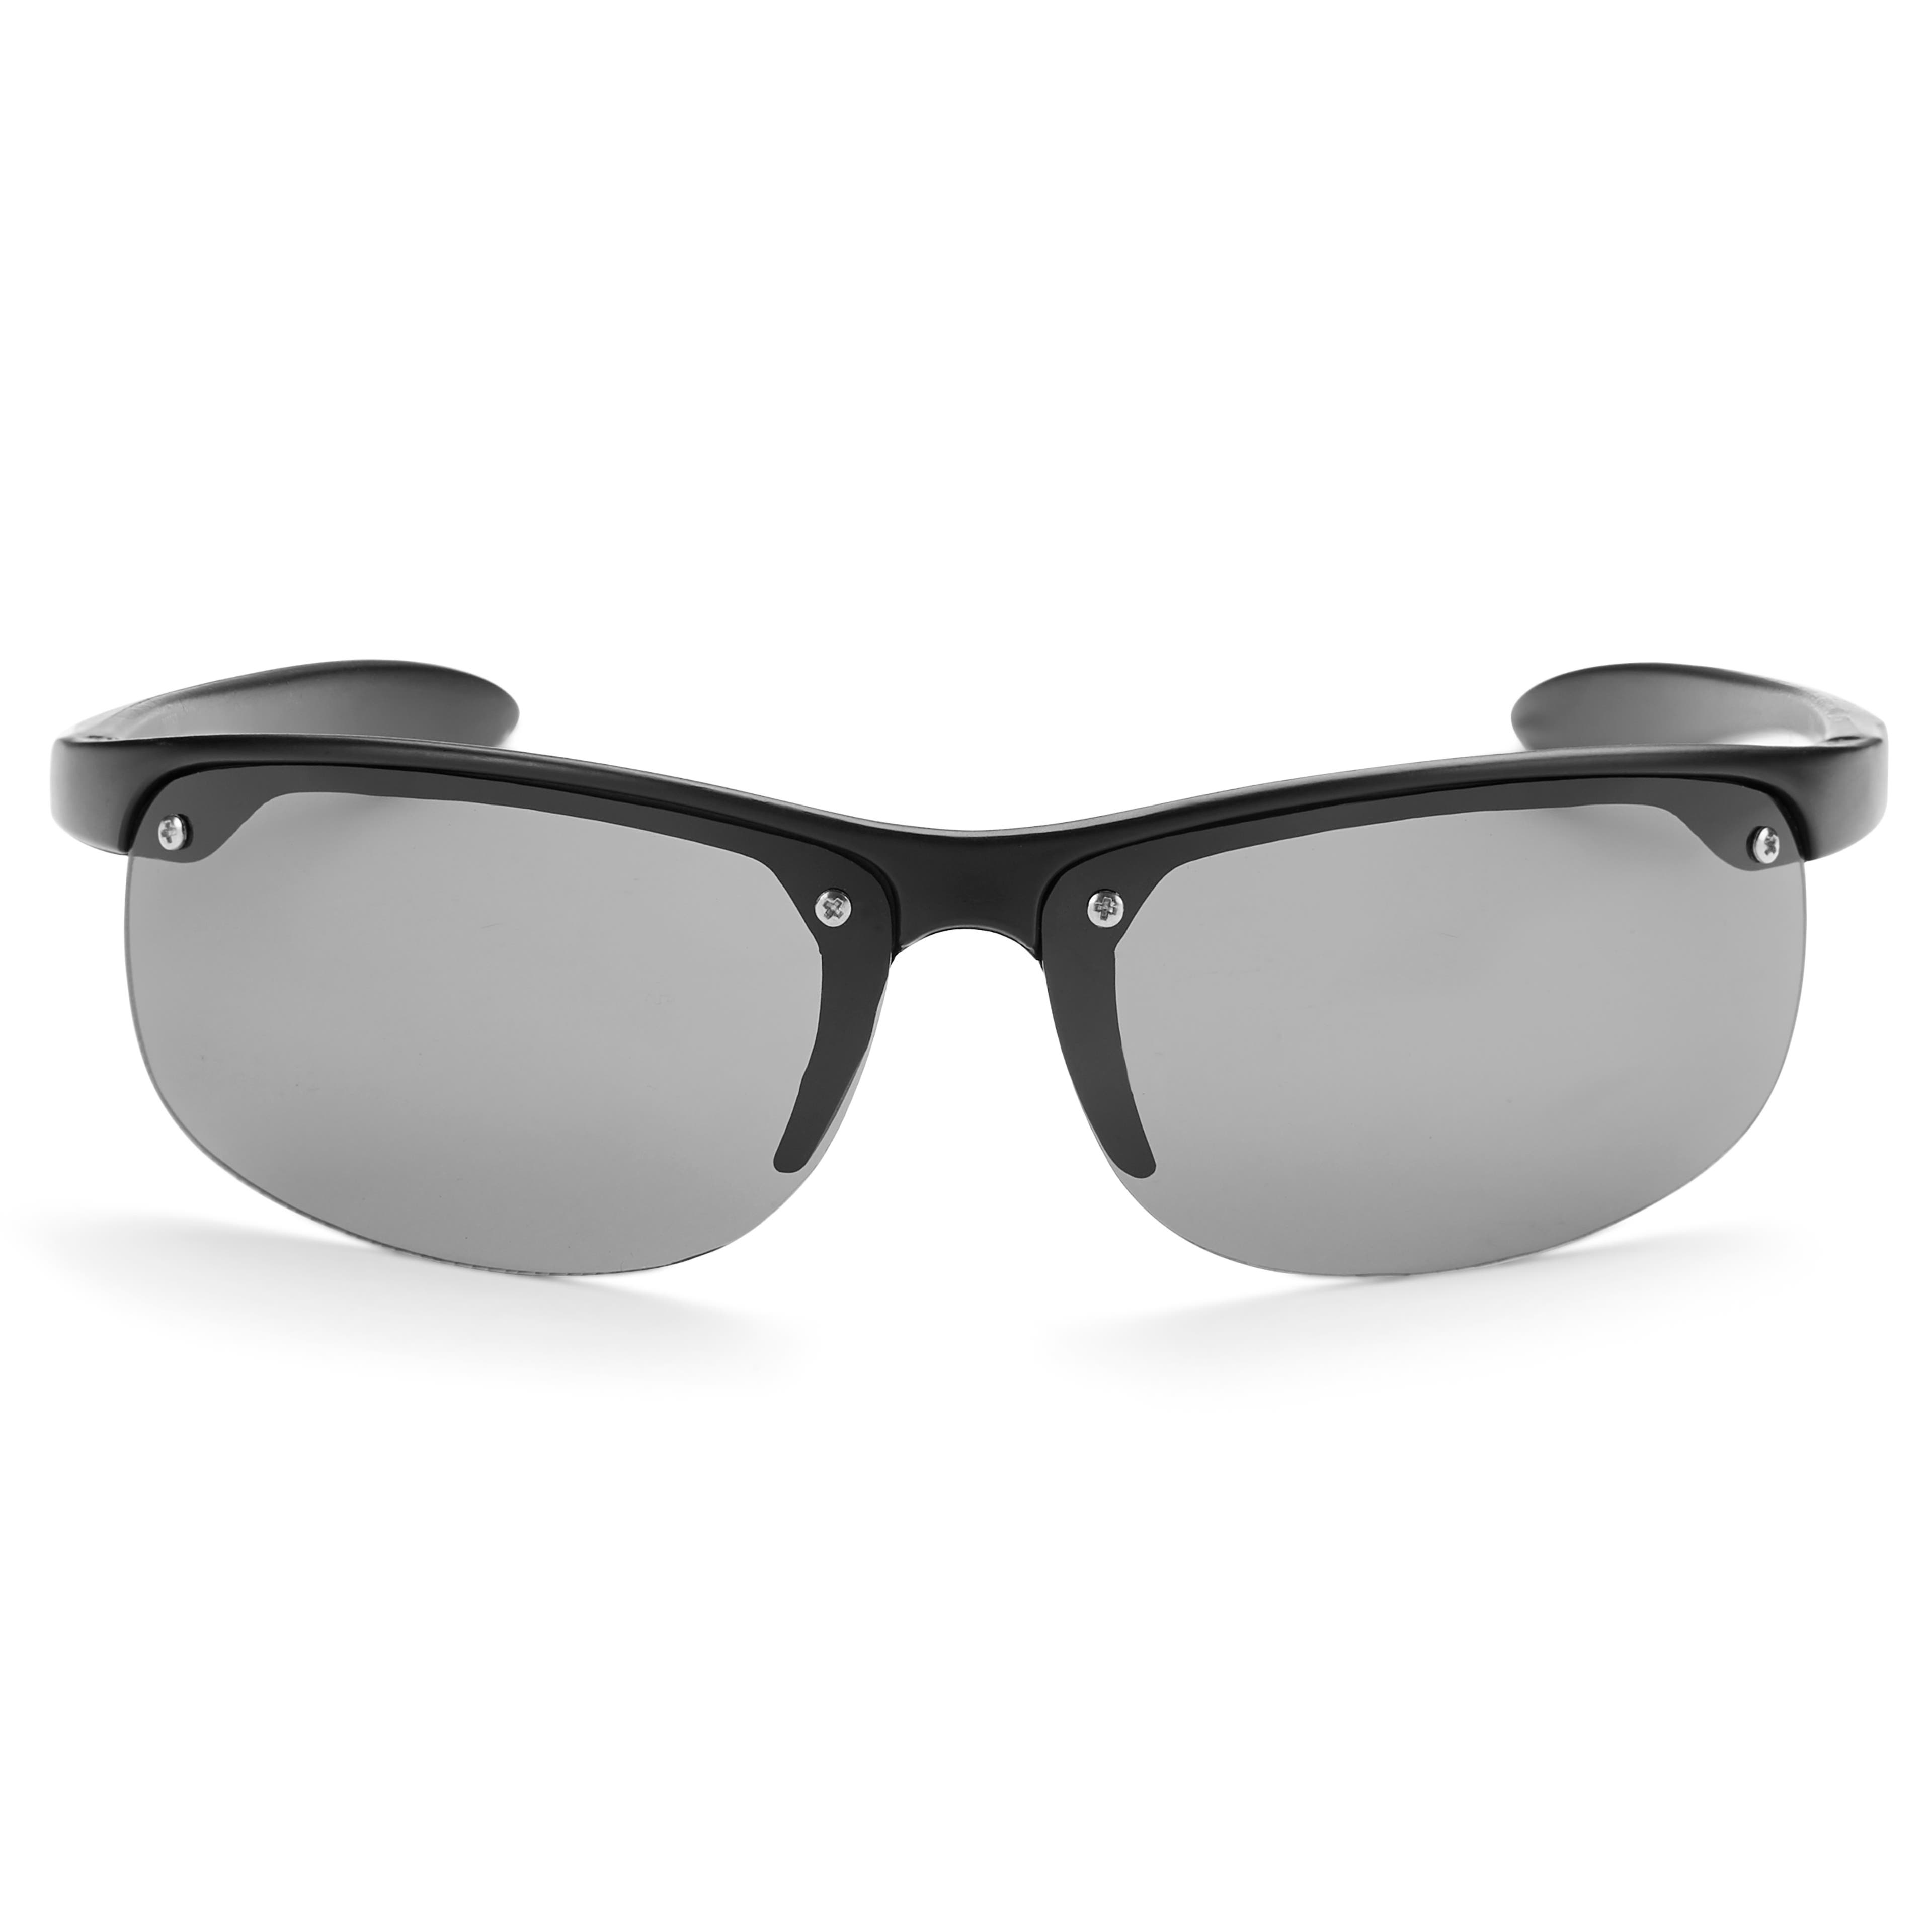 Black & Smoke Wraparound Sports Sunglasses, In stock!